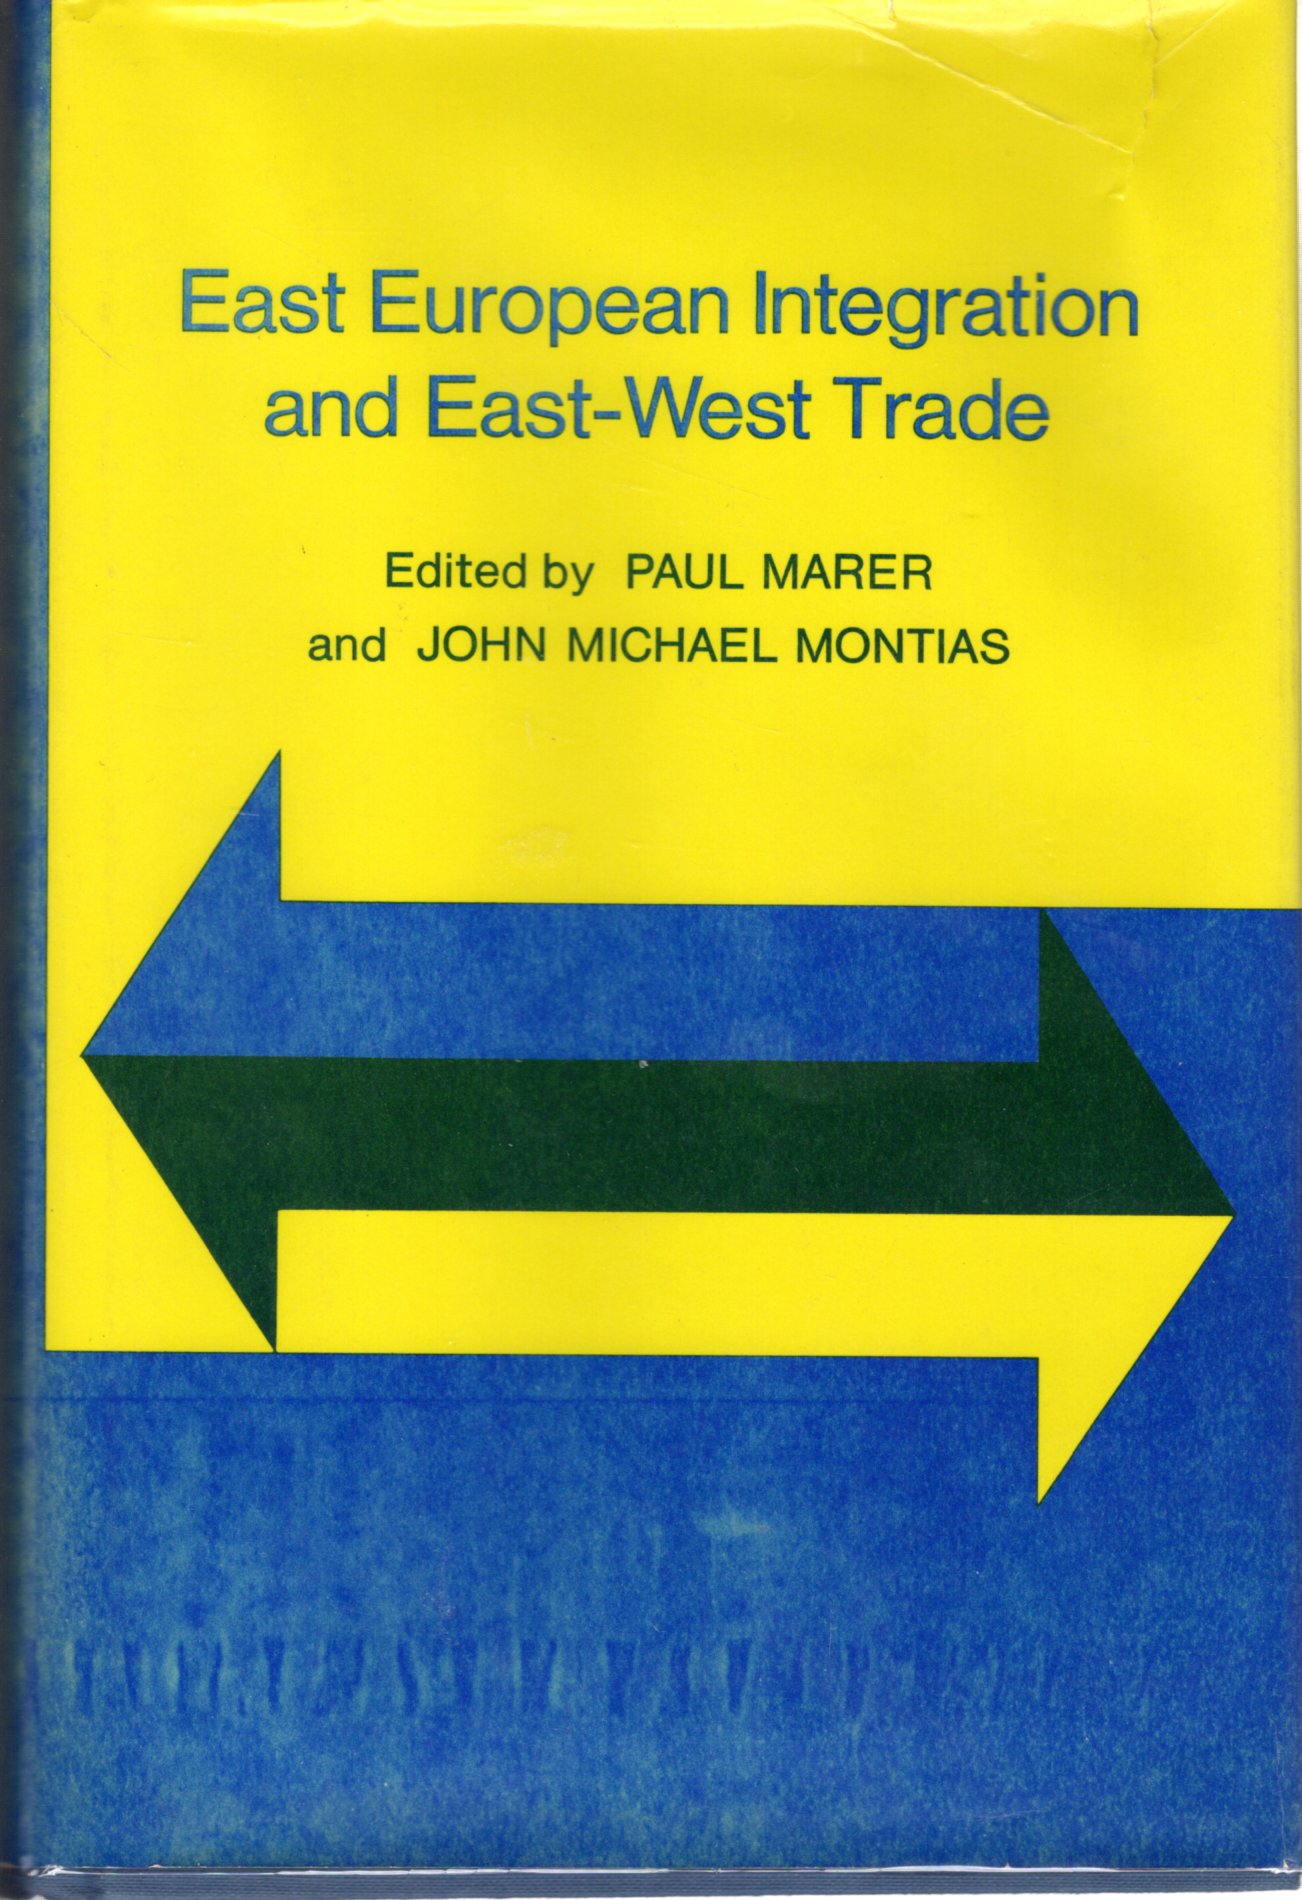 East European Integration and East-West Trade - Marer, Paul & Montias, John Michael